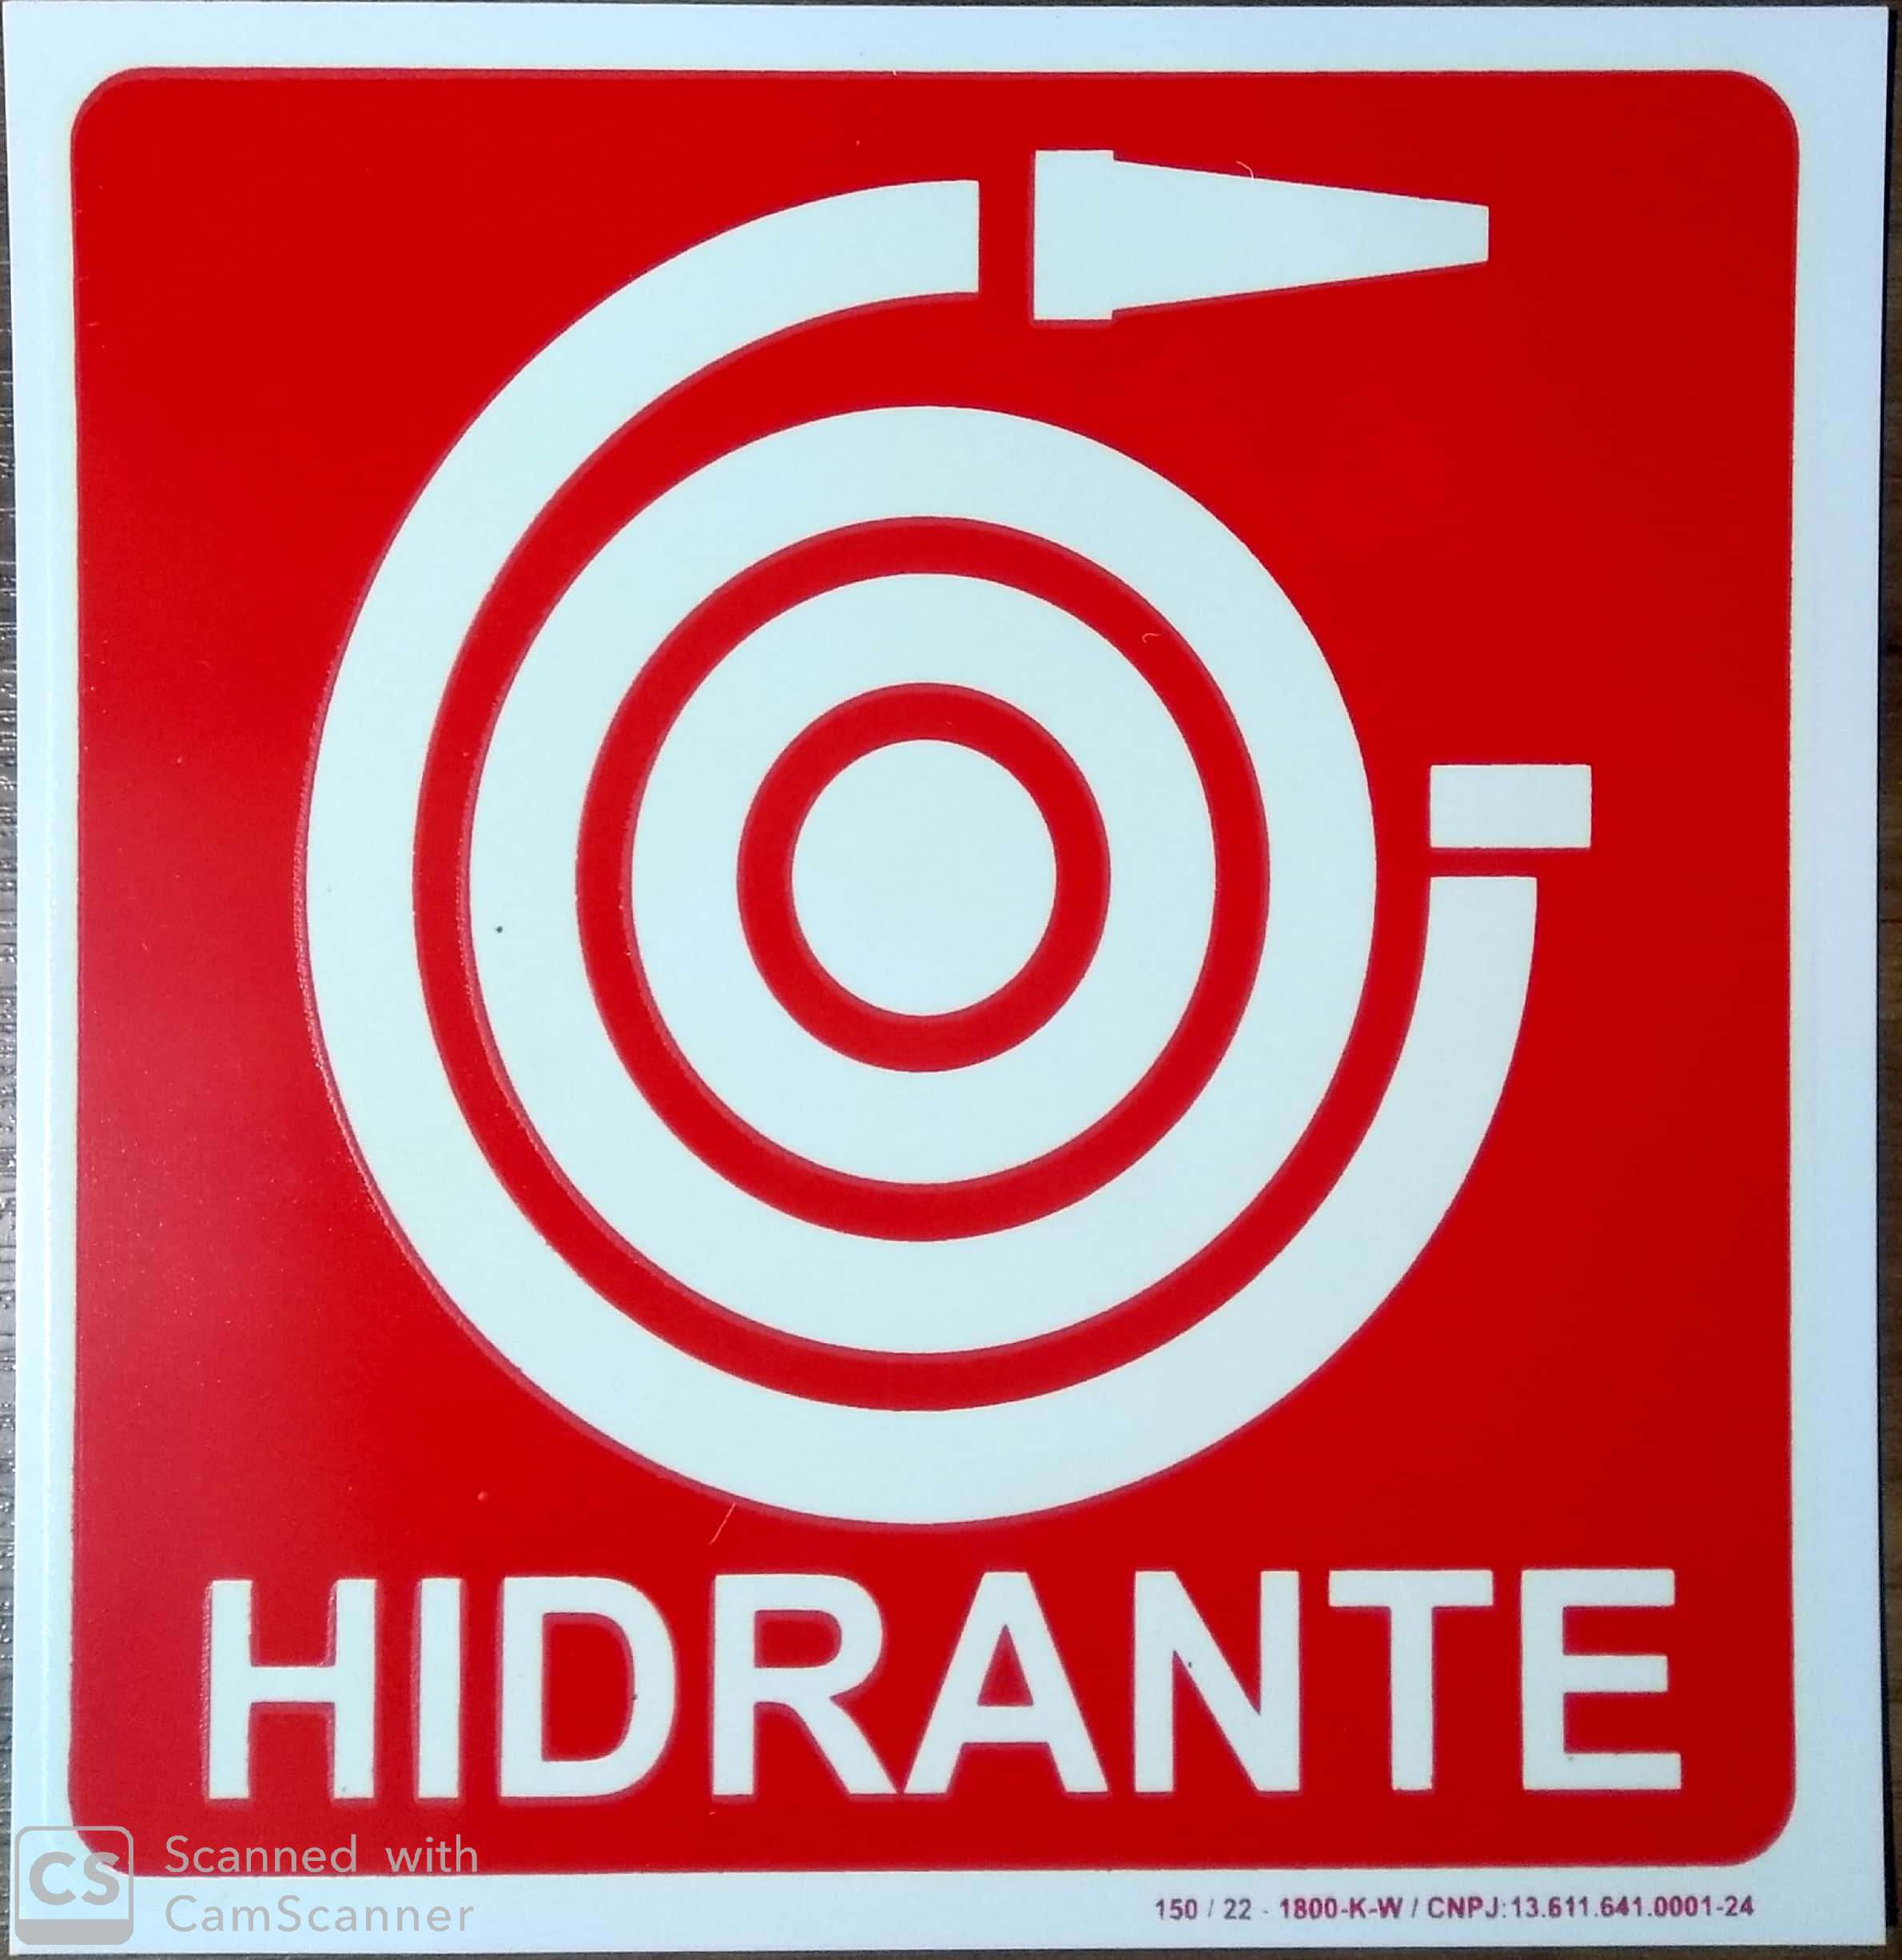 Hidrantex: extintores, hidrantes, mangueiras, placas